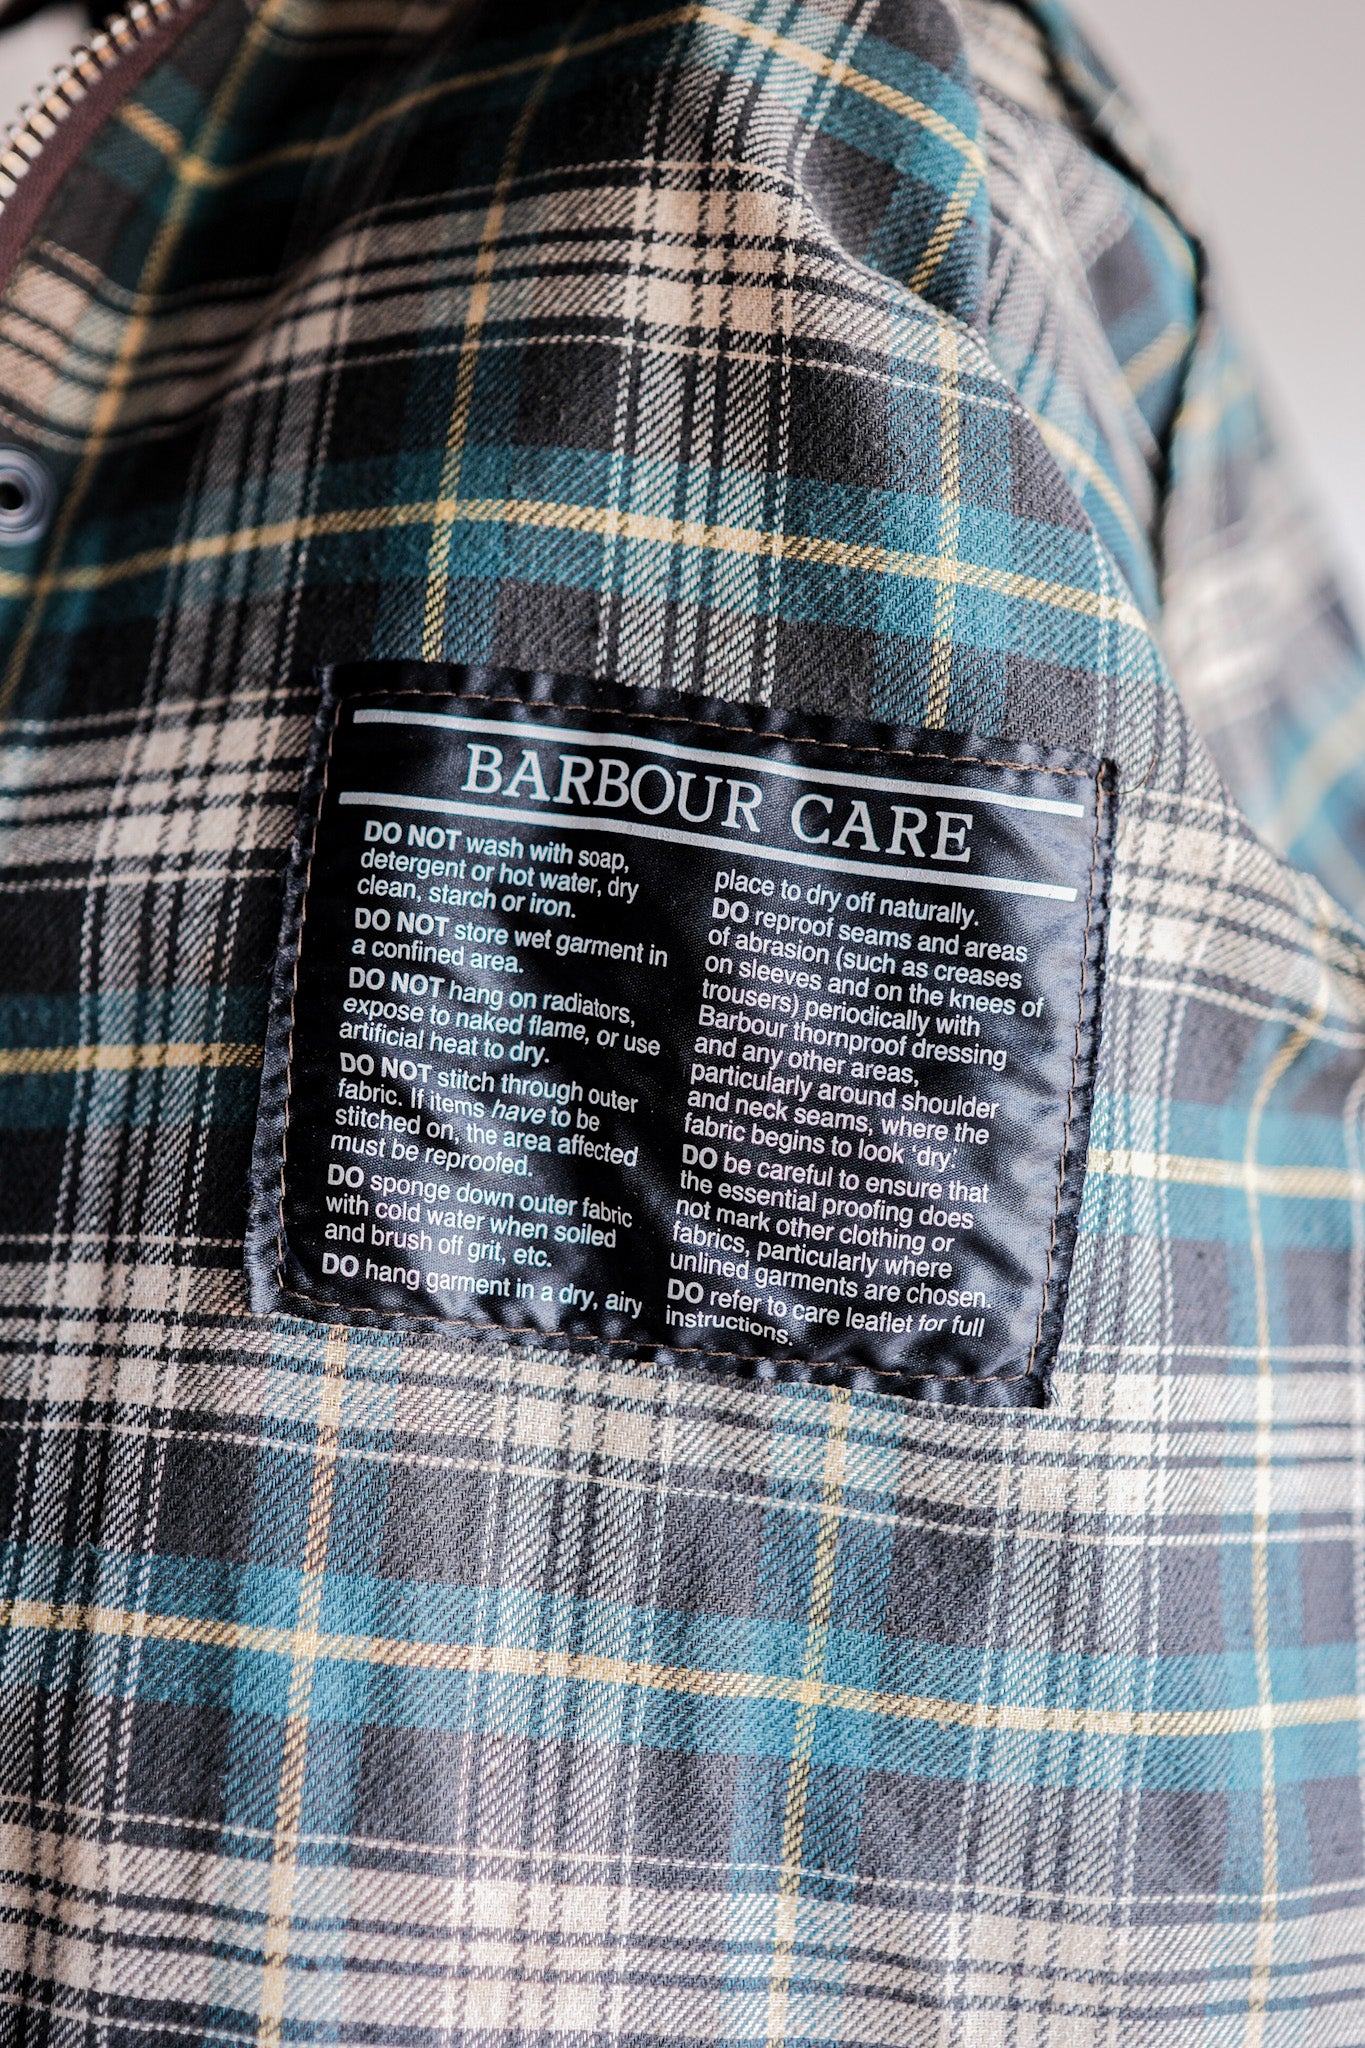 [~ 80's] Barbour "Beaufort" กับ Hood 2 Crest Size.38